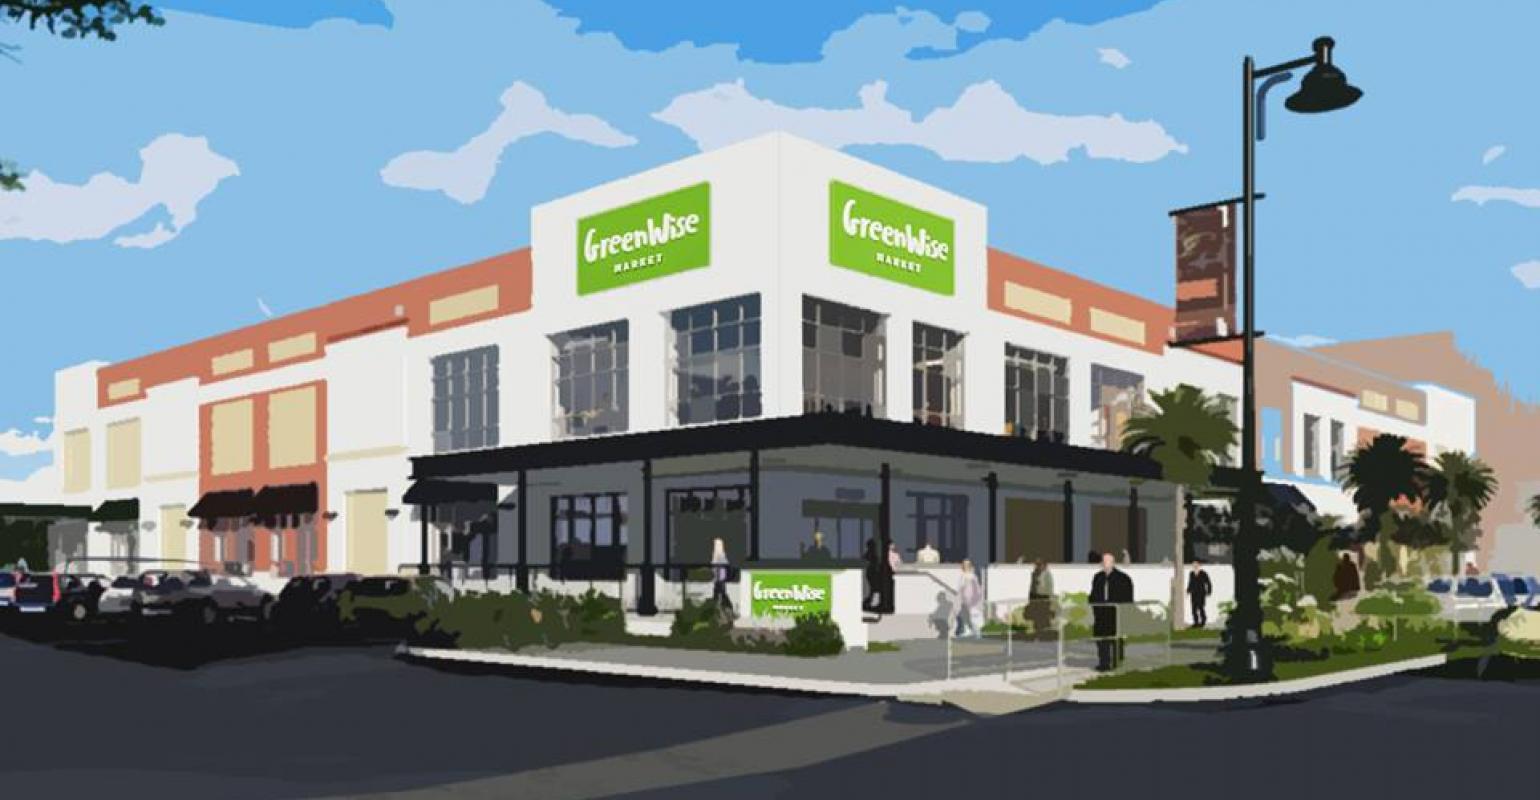 Publix Plans Greenwise Market For Atlanta Area Supermarket News